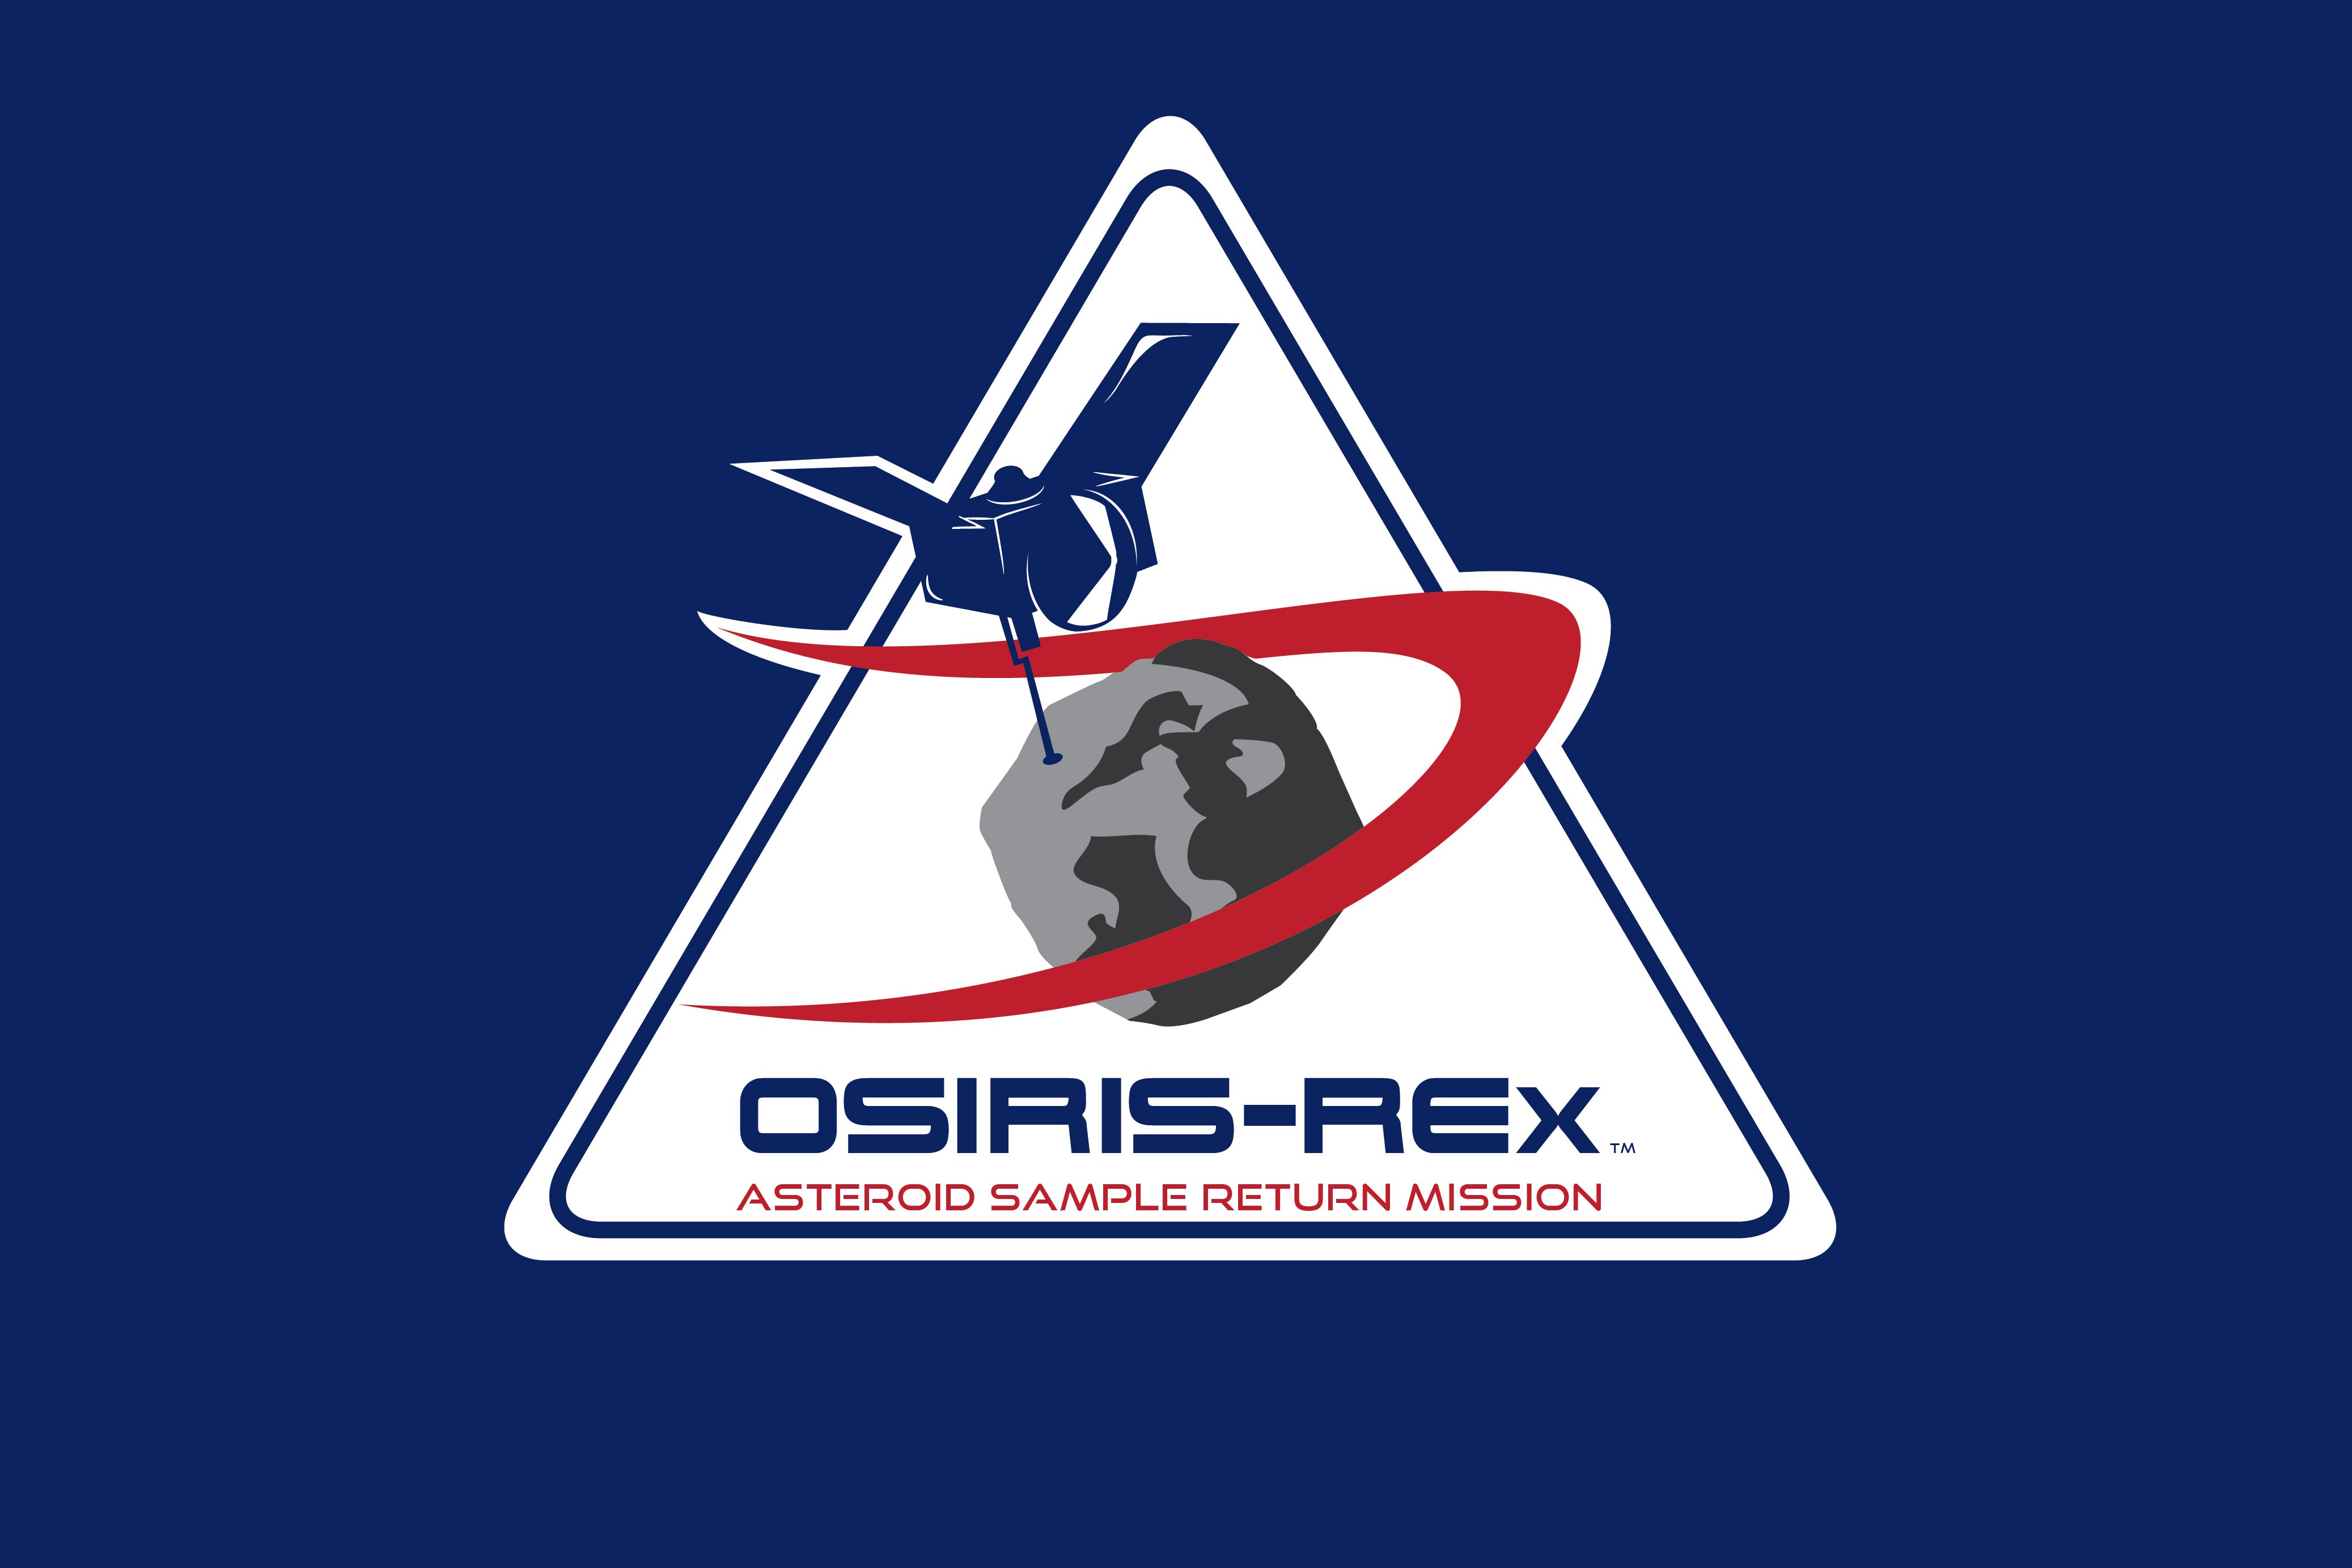 Logo credit: OSISRIS-REx